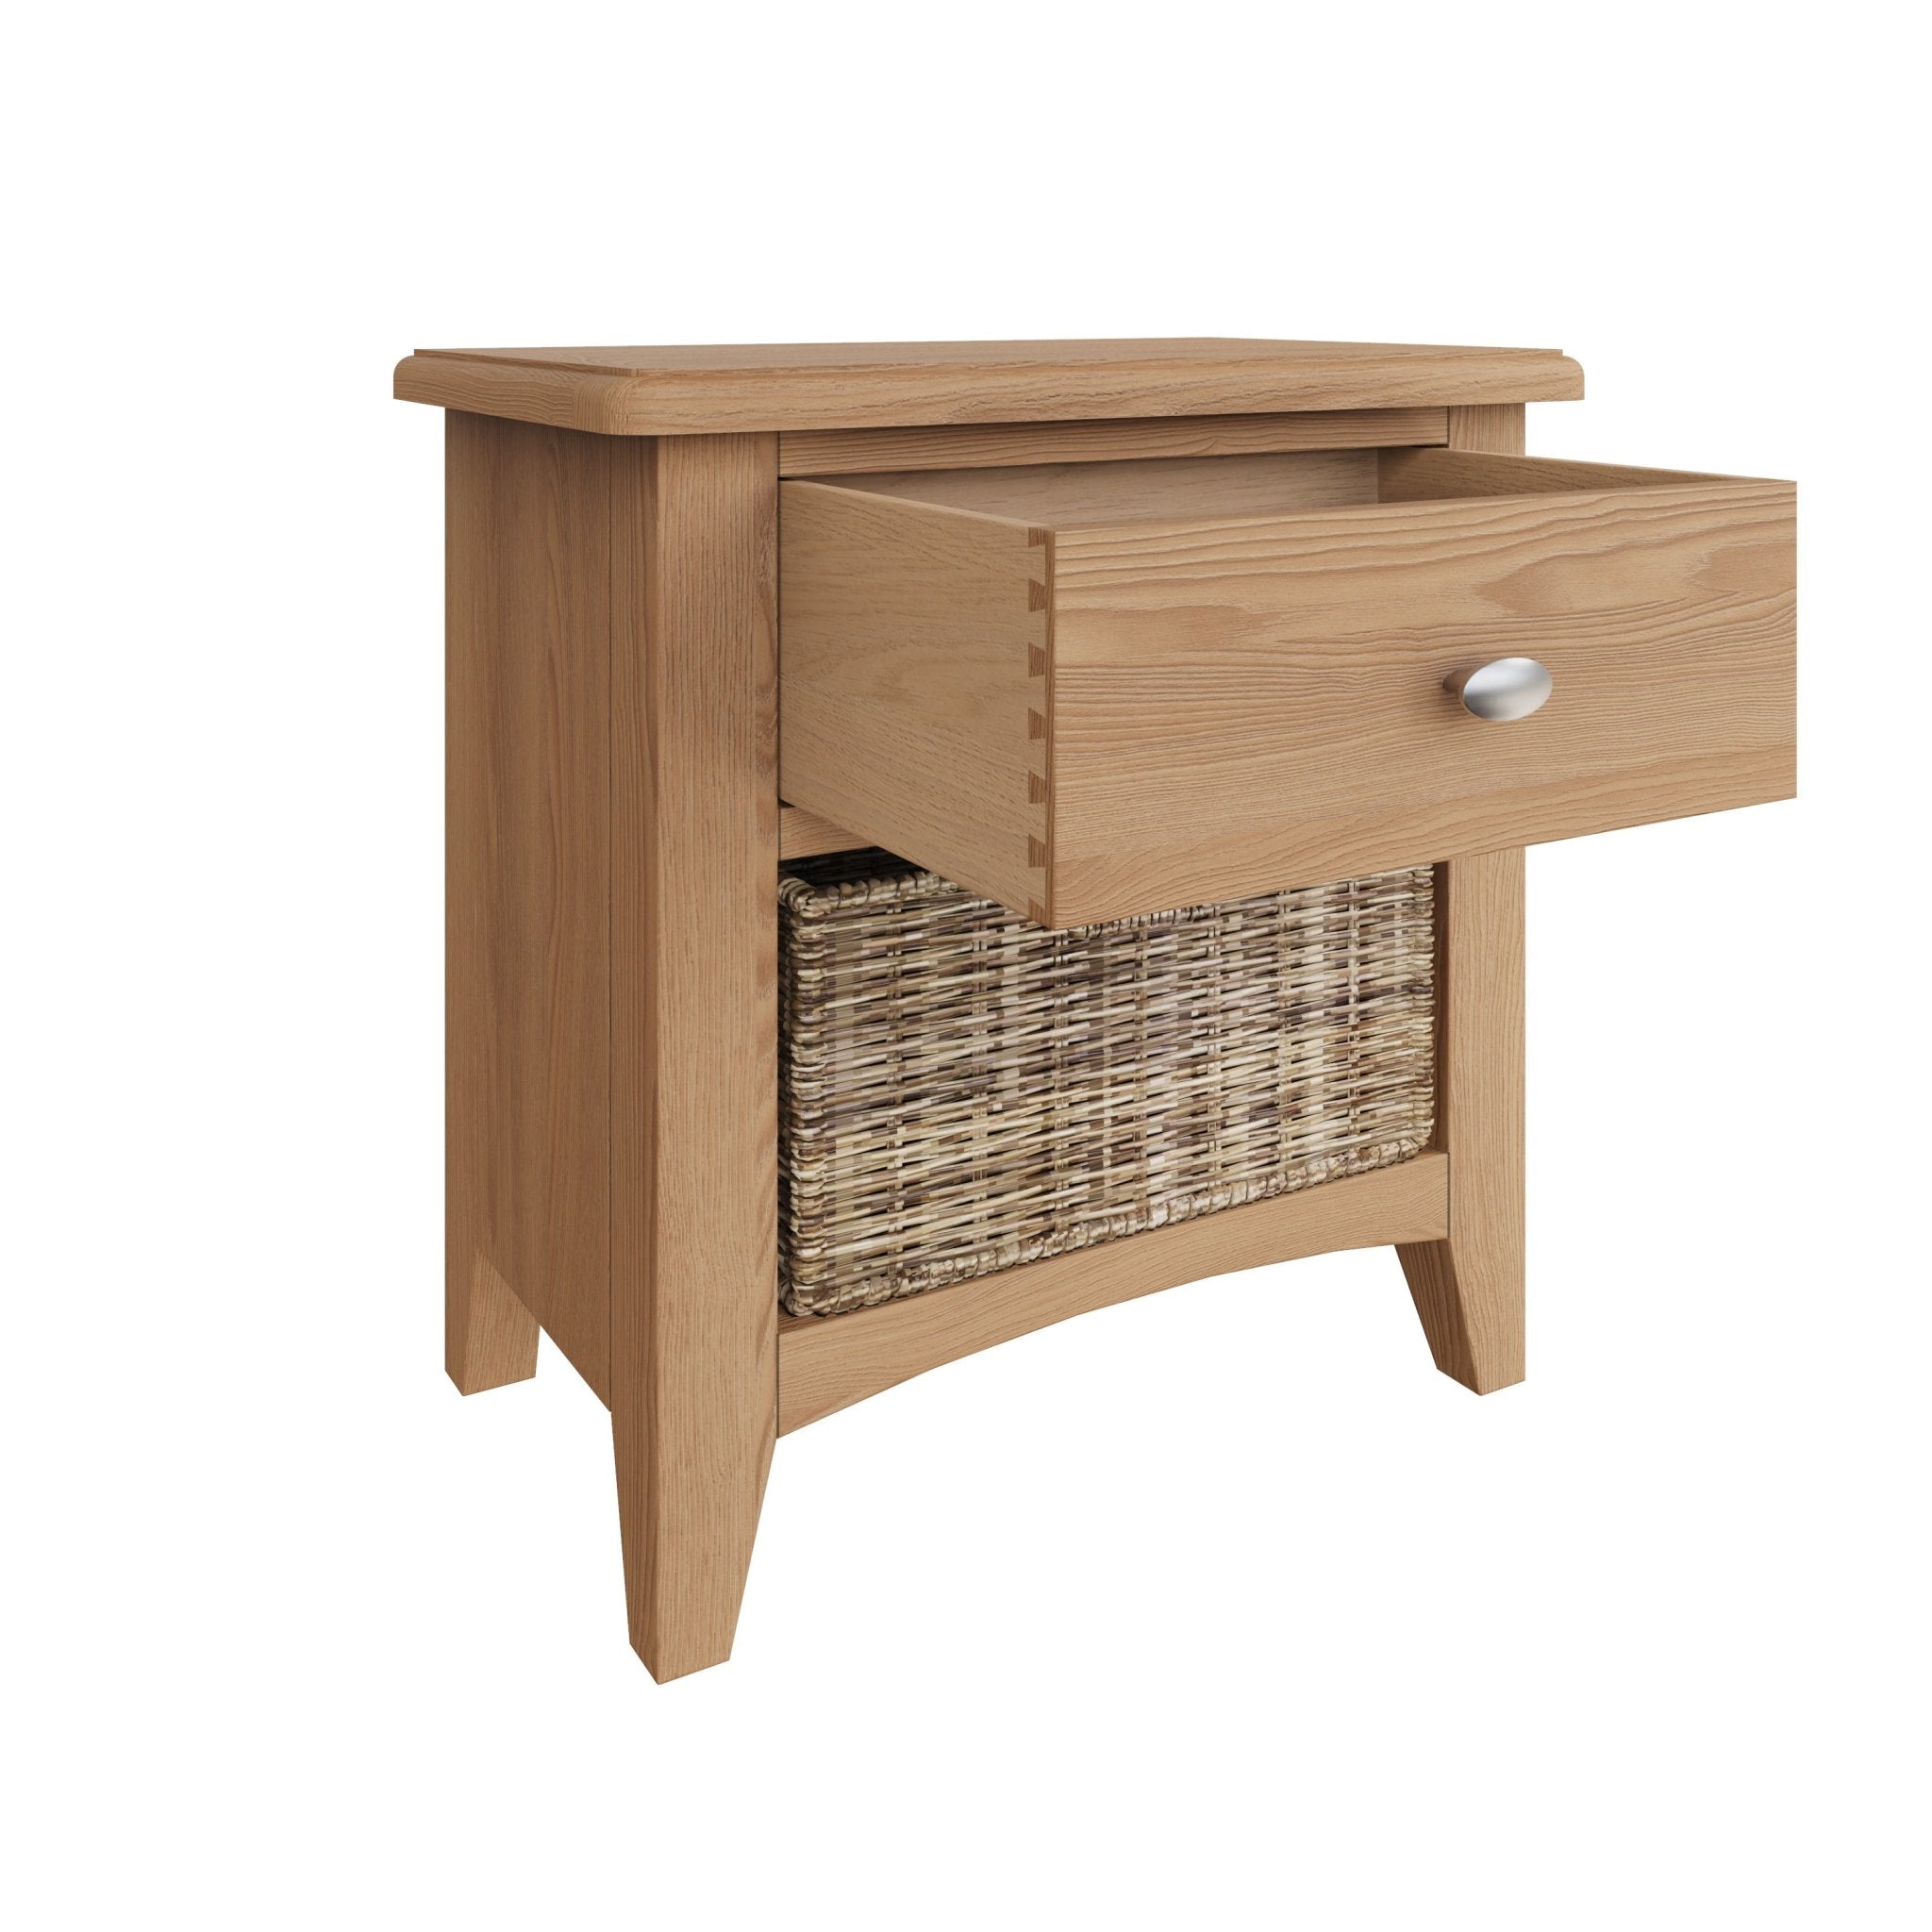 Ockley Oak 1 Drawer 1 Basket Cabinet - Duck Barn Interiors